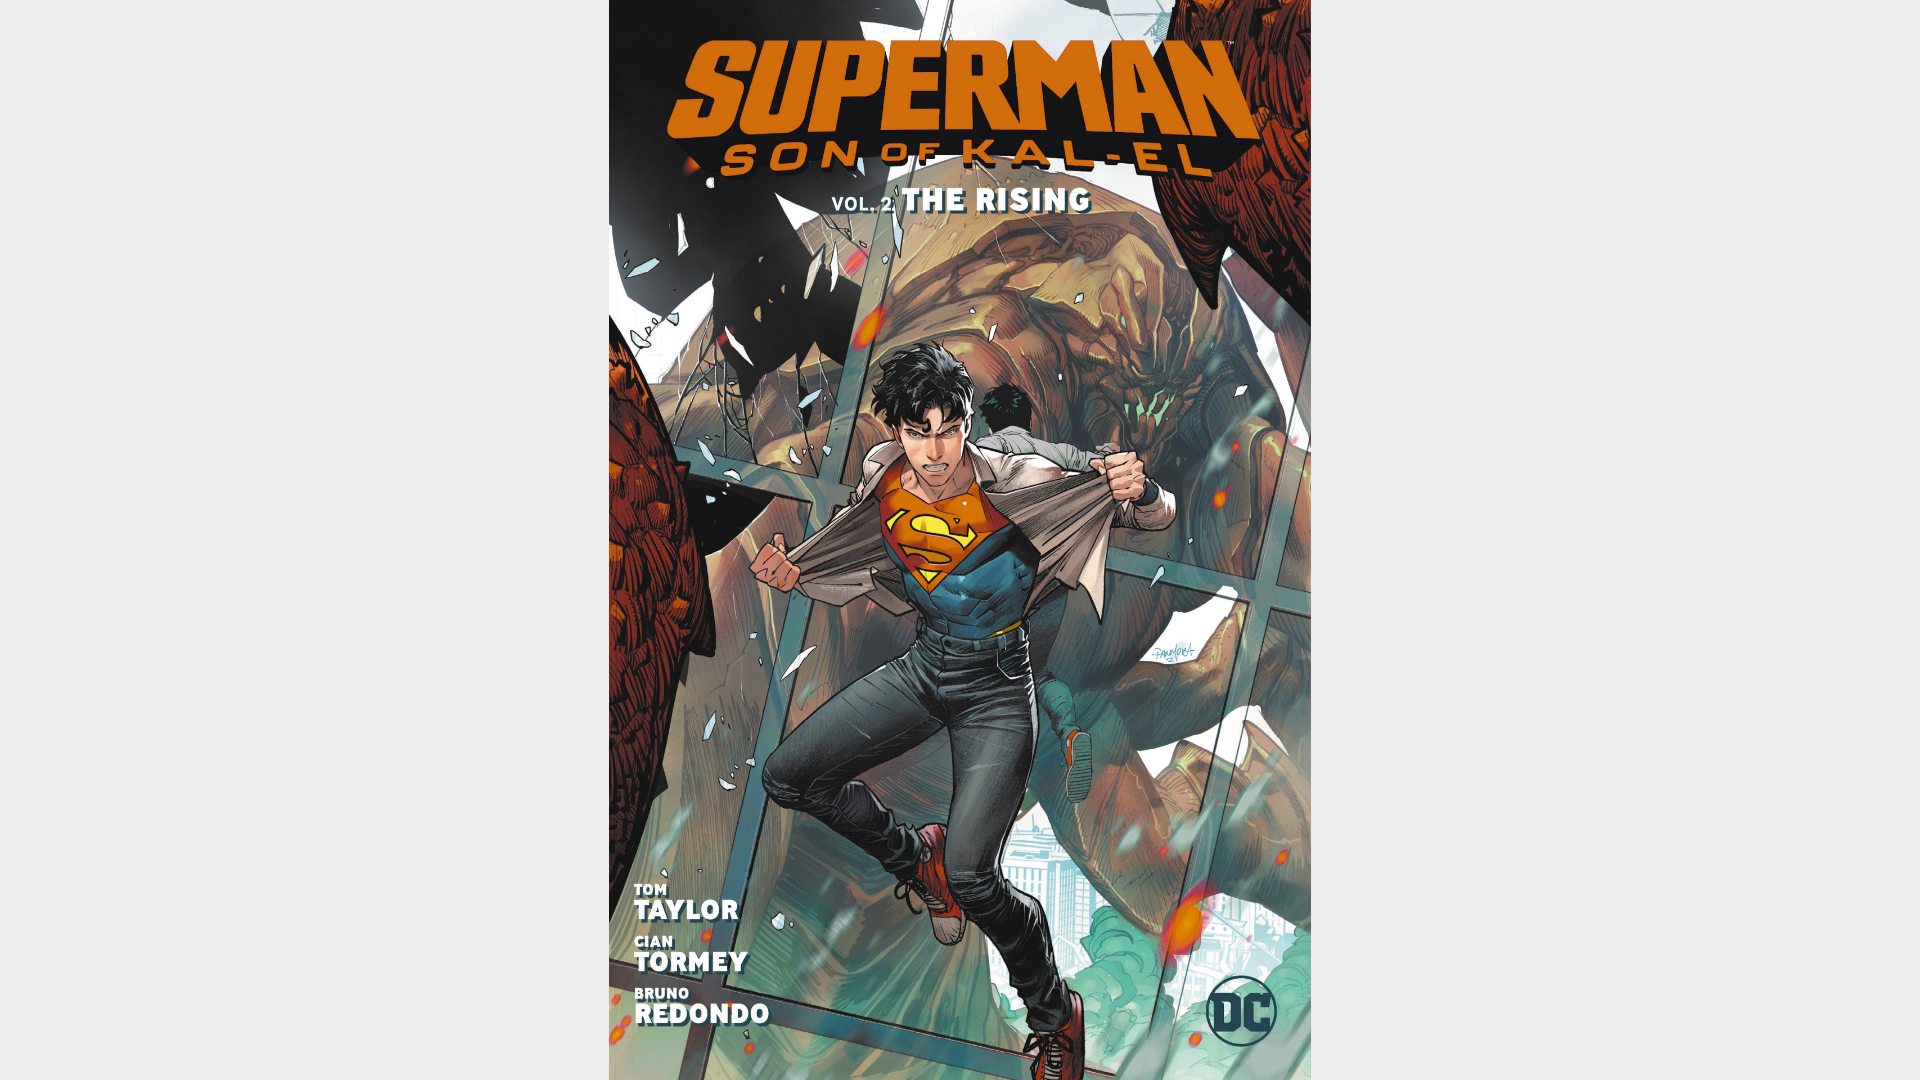 SUPERMAN: ZOON VAN KAL-EL VOL. 2: THE RISING